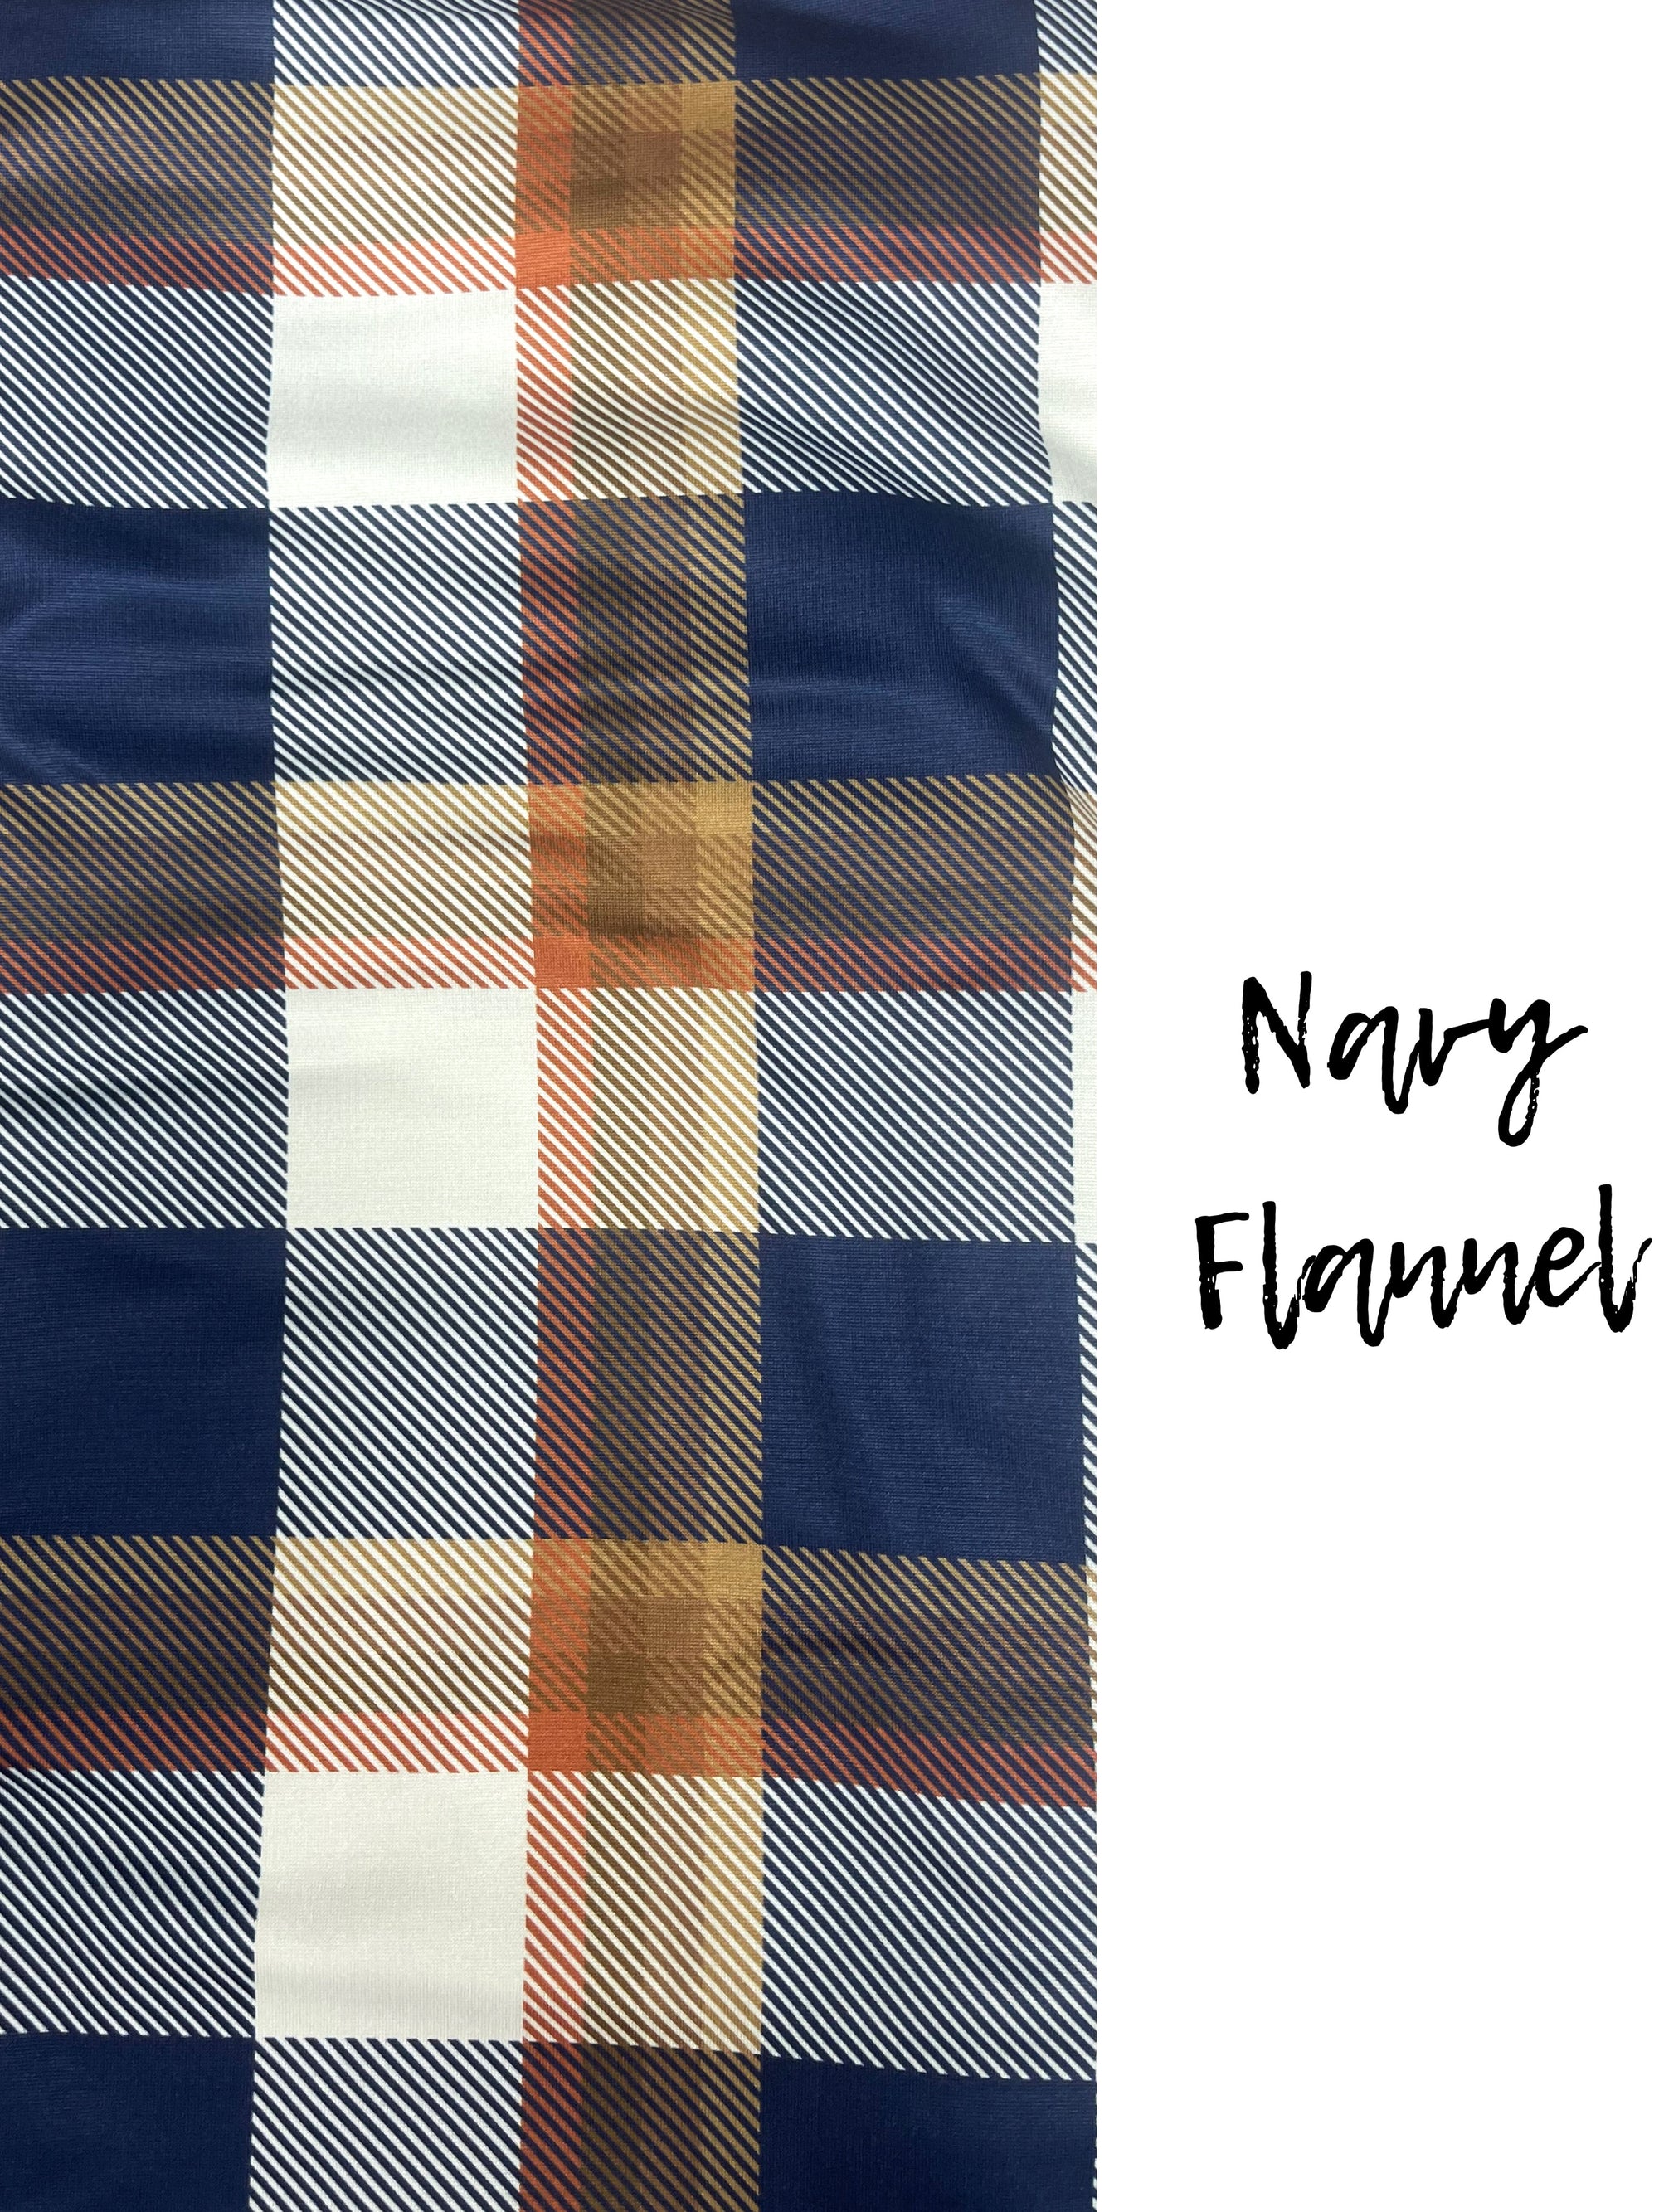 Navy Flannel